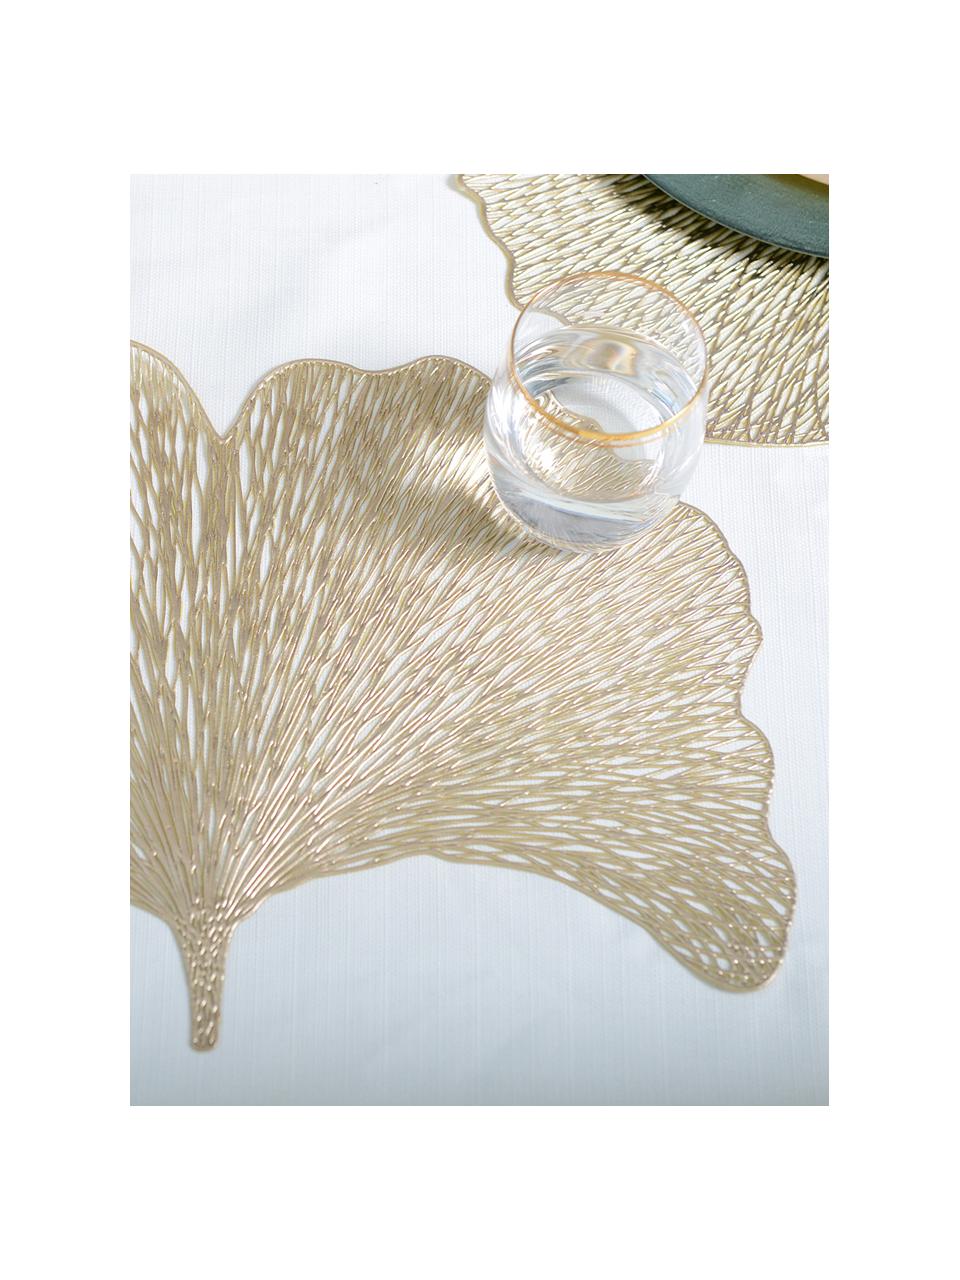 Goldene Kunststoff-Tischsets Ginkgo in Blattform, 2 Stück, Kunststoff, Goldfarben, B 30 x L 44 cm